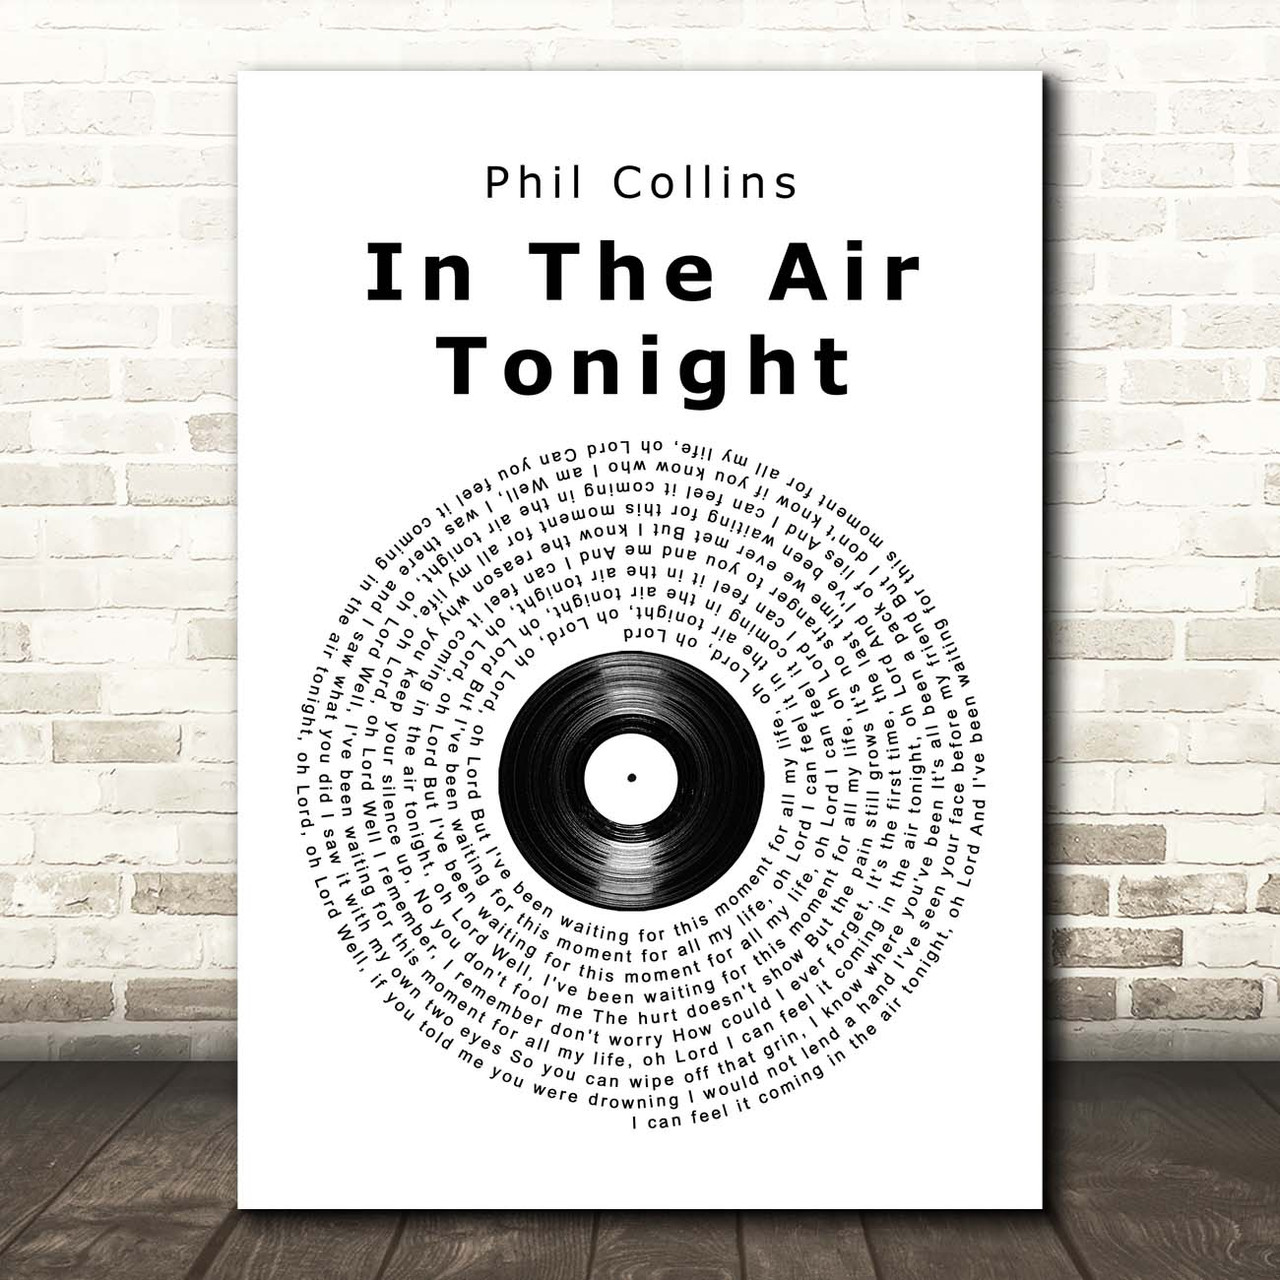 Phil Collins – In the Air Tonight Lyrics